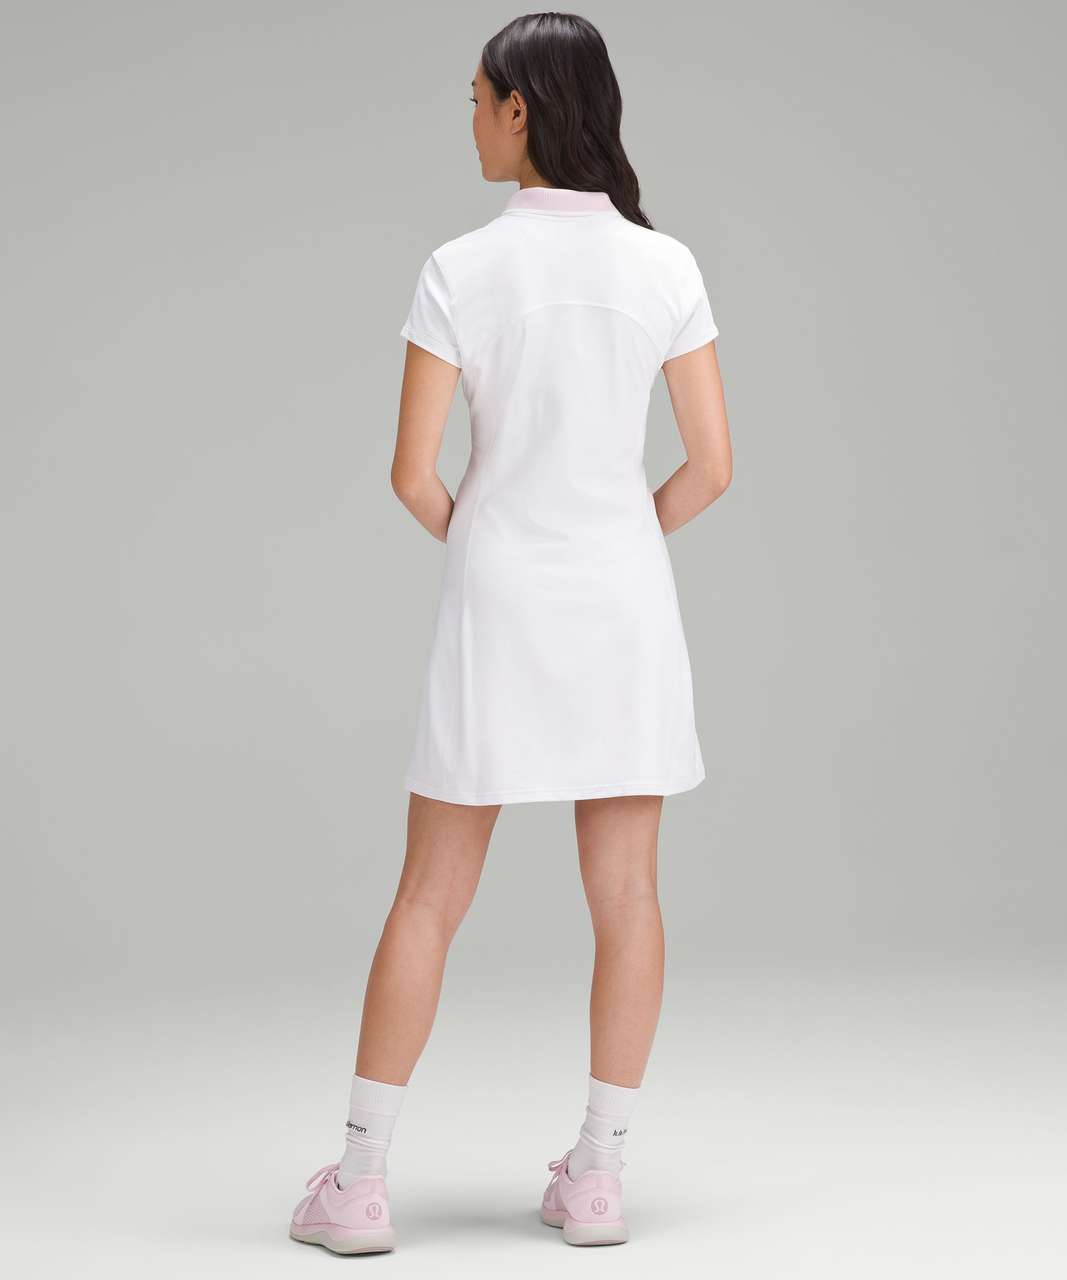 Lululemon Short-Sleeve Polo Dress - White / Meadowsweet Pink